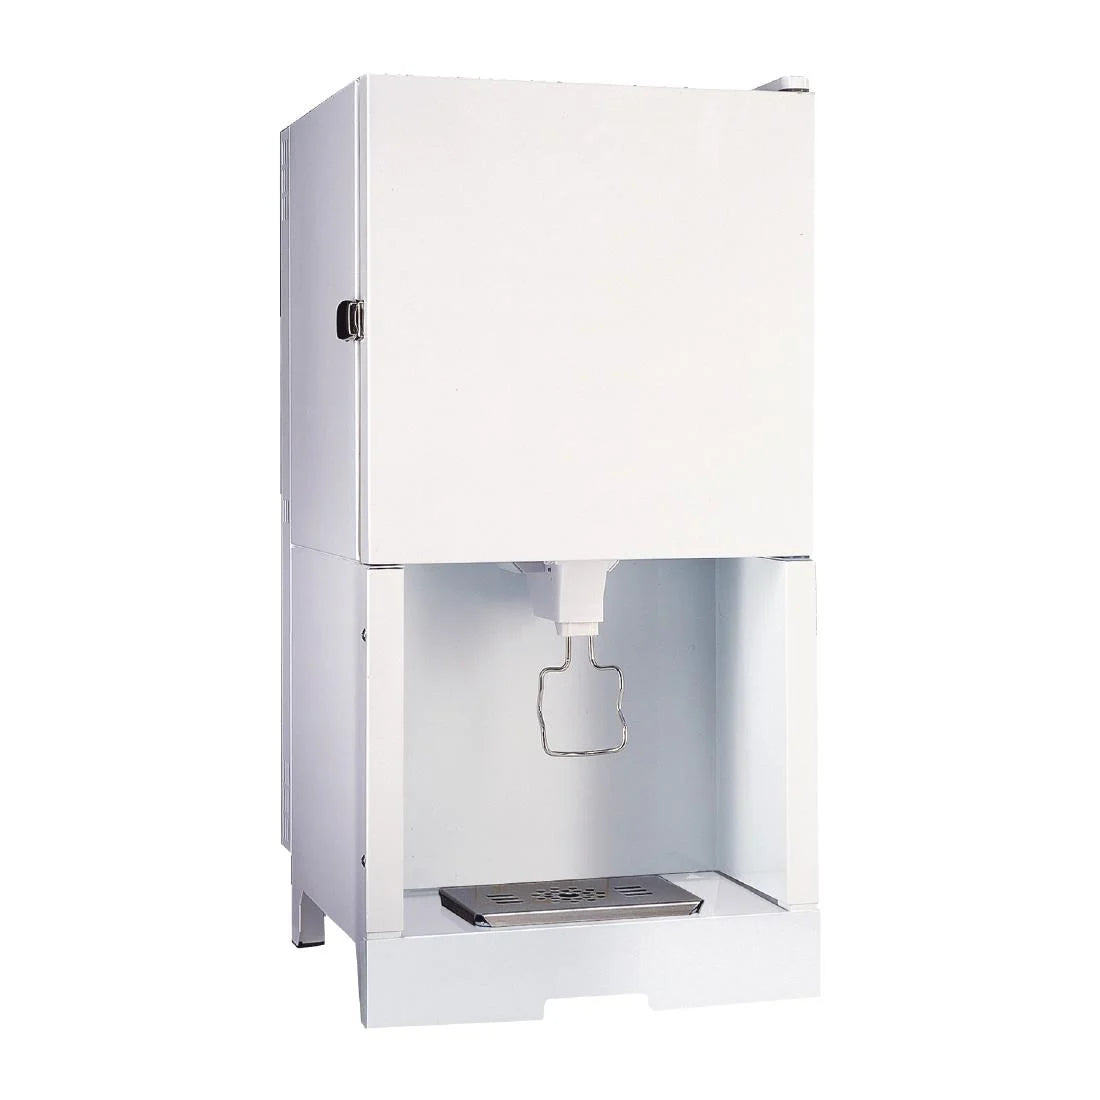 CC610 Autonumis Milk Cooler A102 JD Catering Equipment Solutions Ltd